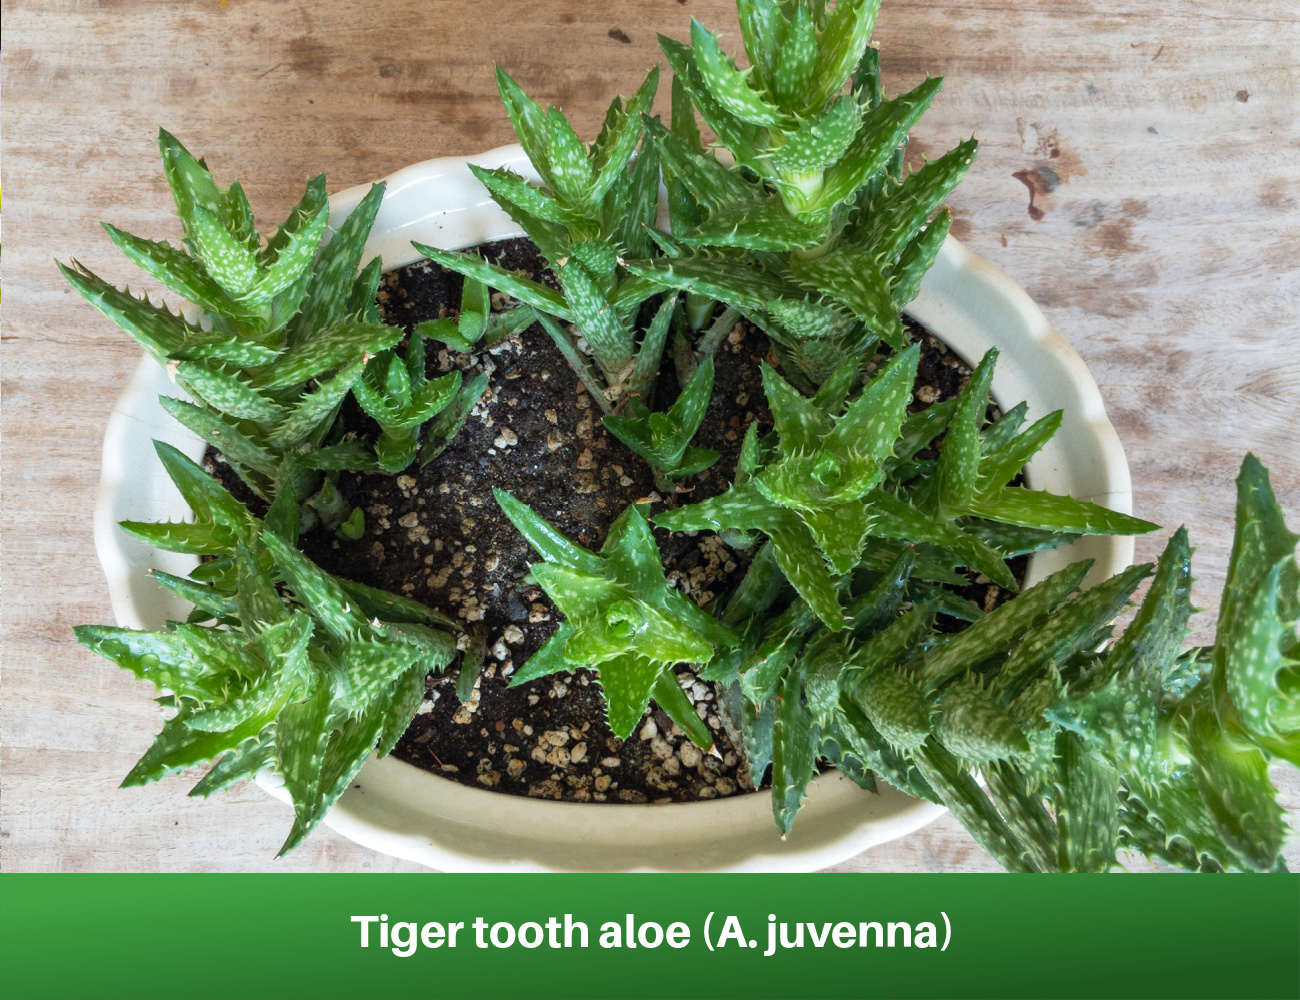 _Tiger tooth aloe (A. juvenna)